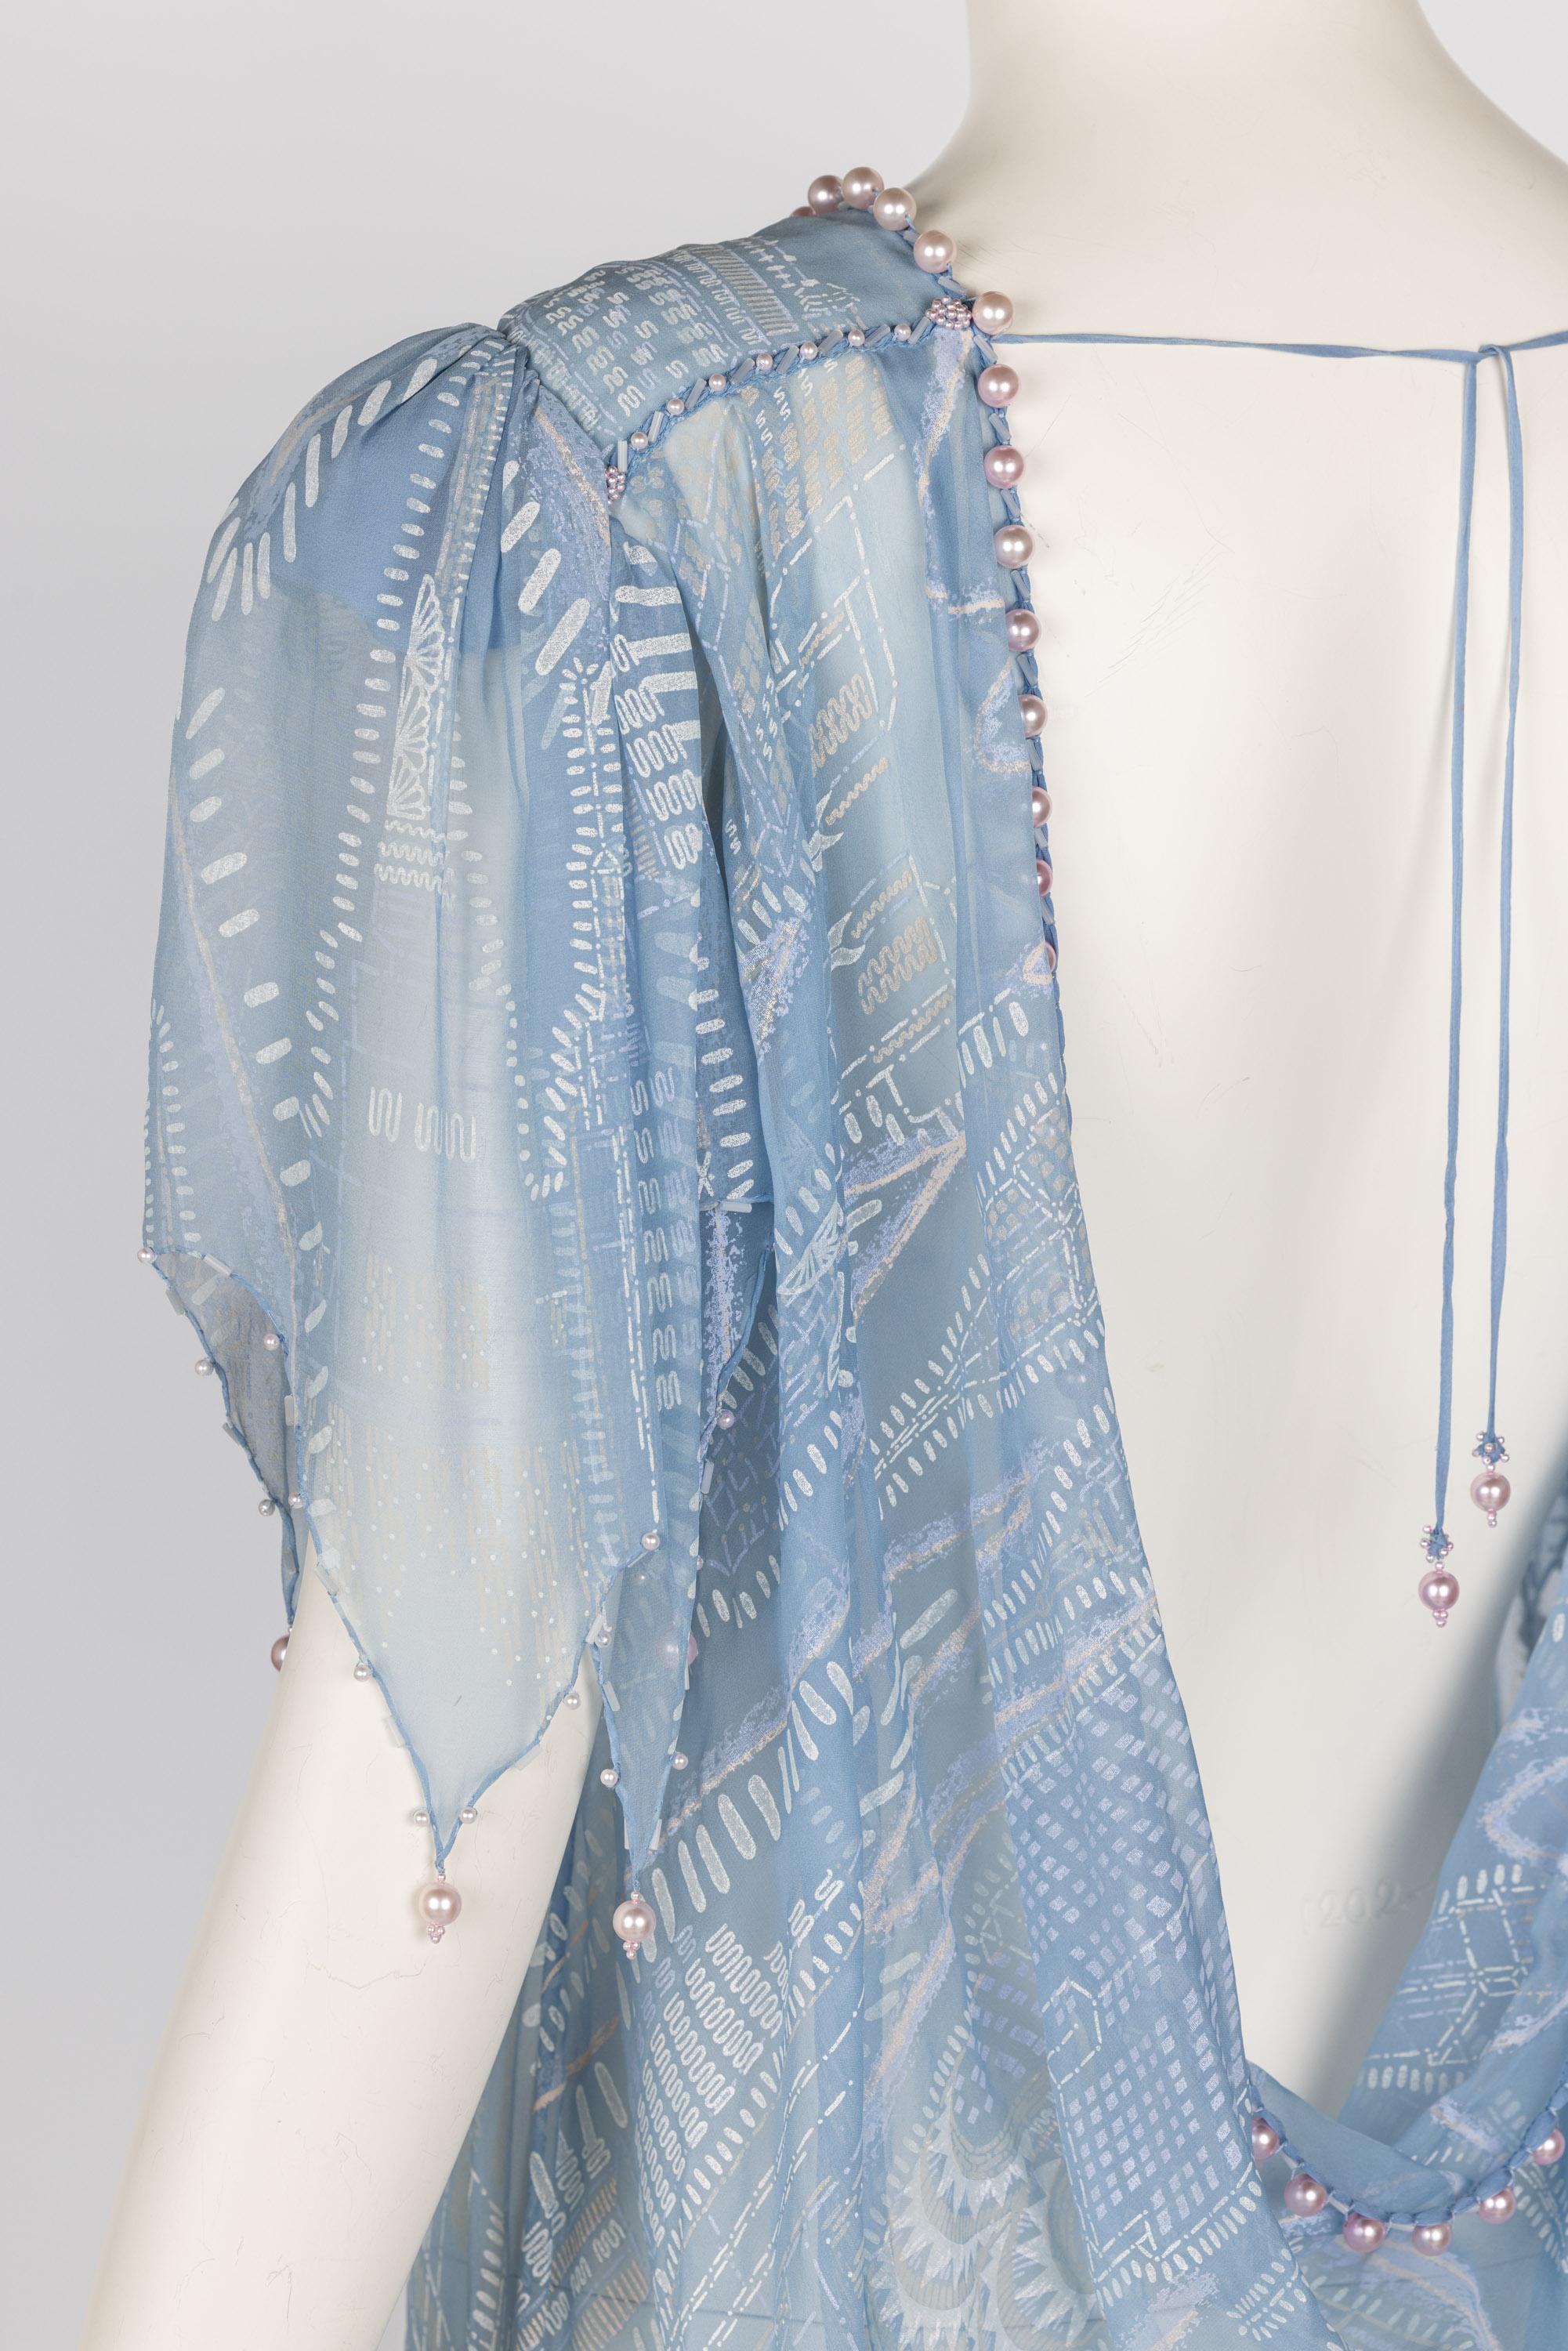 Zandra Rhodes Light Blue Hand Printed Sheer Silk Pearl Beaded Dress Museum Piece For Sale 6